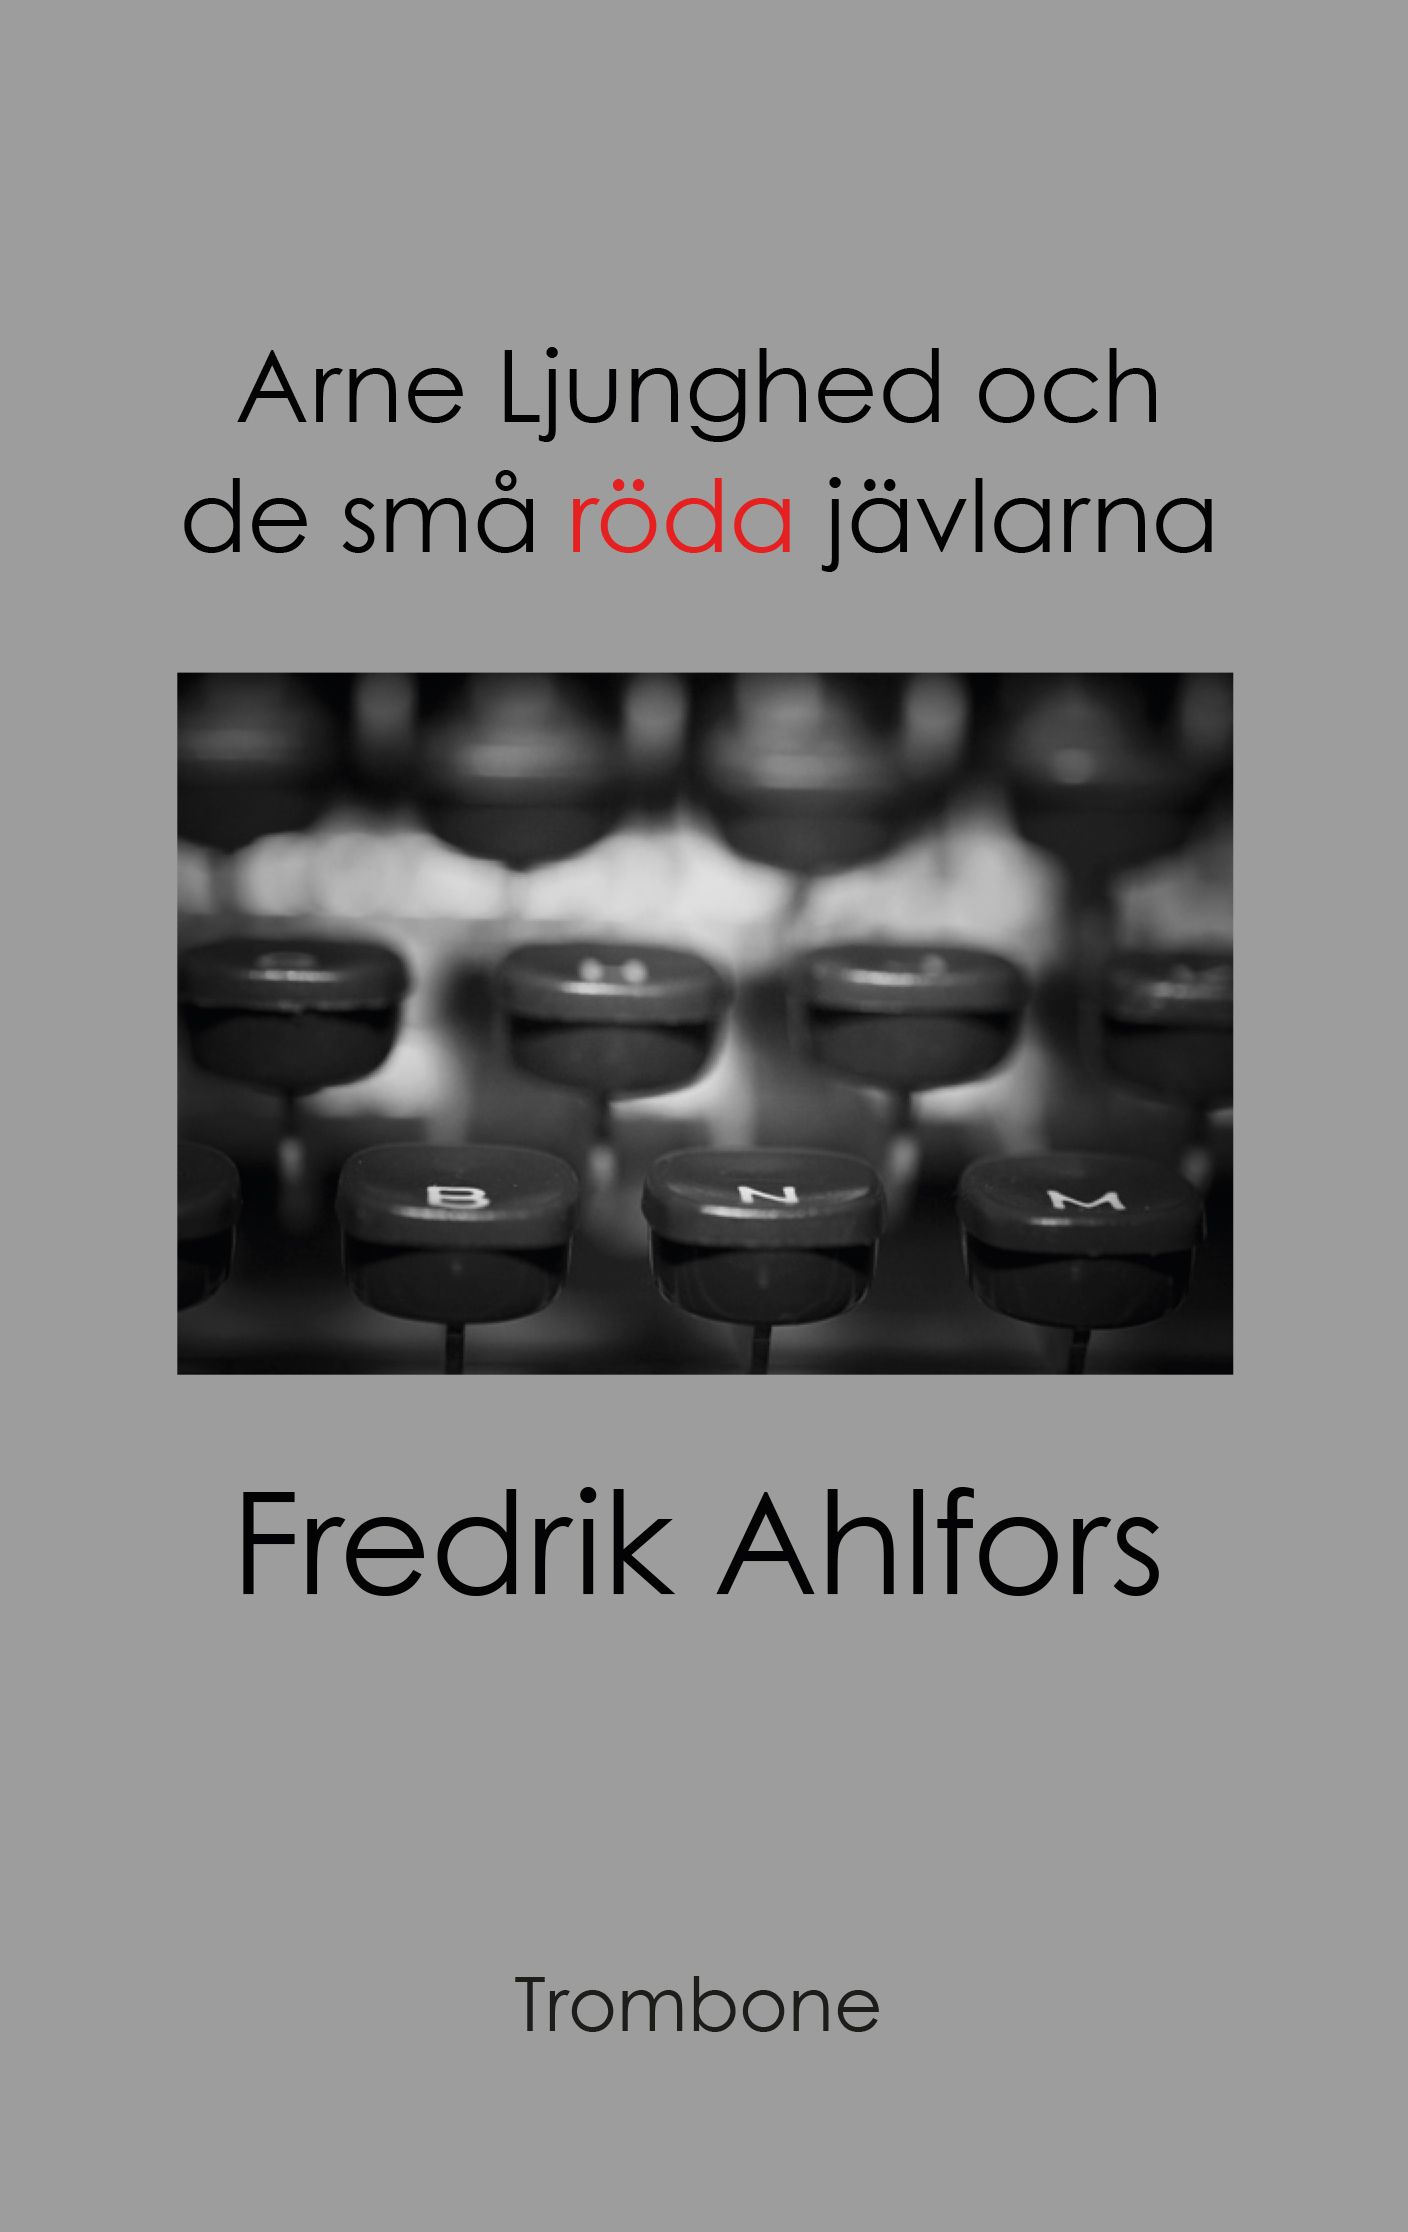 Arne Ljunghed och de små röda jävlarna, e-bog af Fredrik Ahlfors